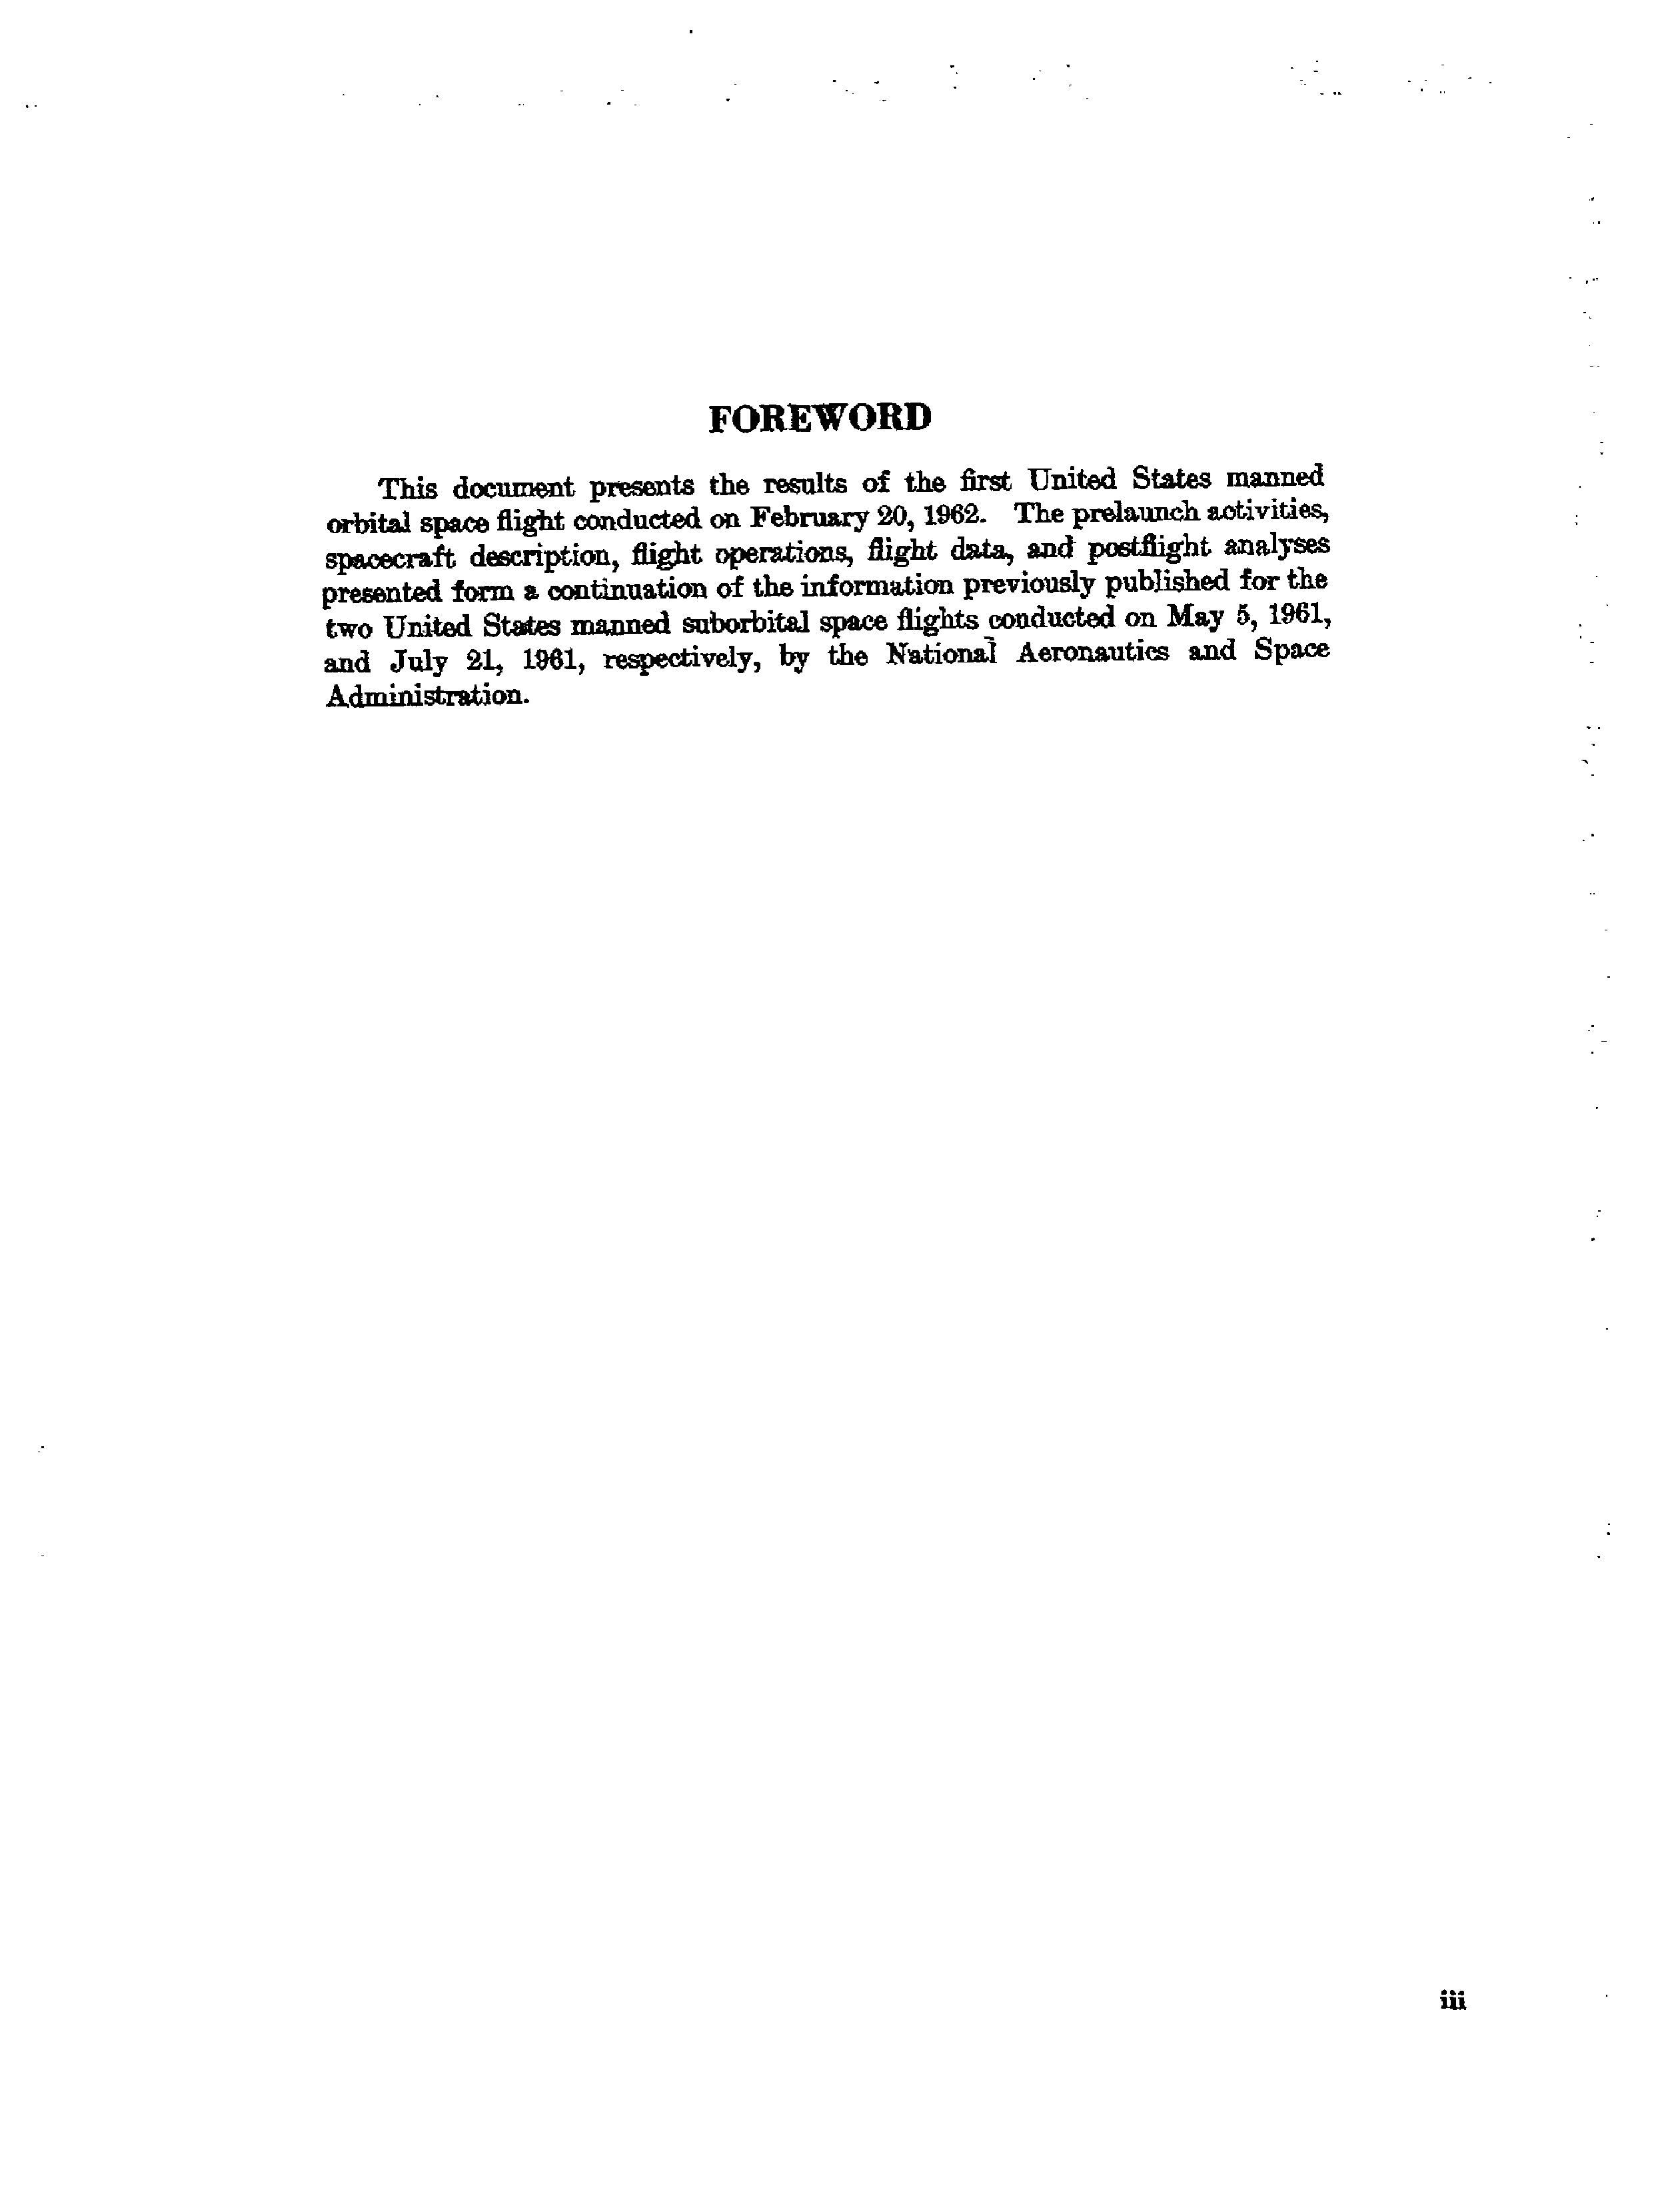 Page 3 of Mercury 6’s original transcript